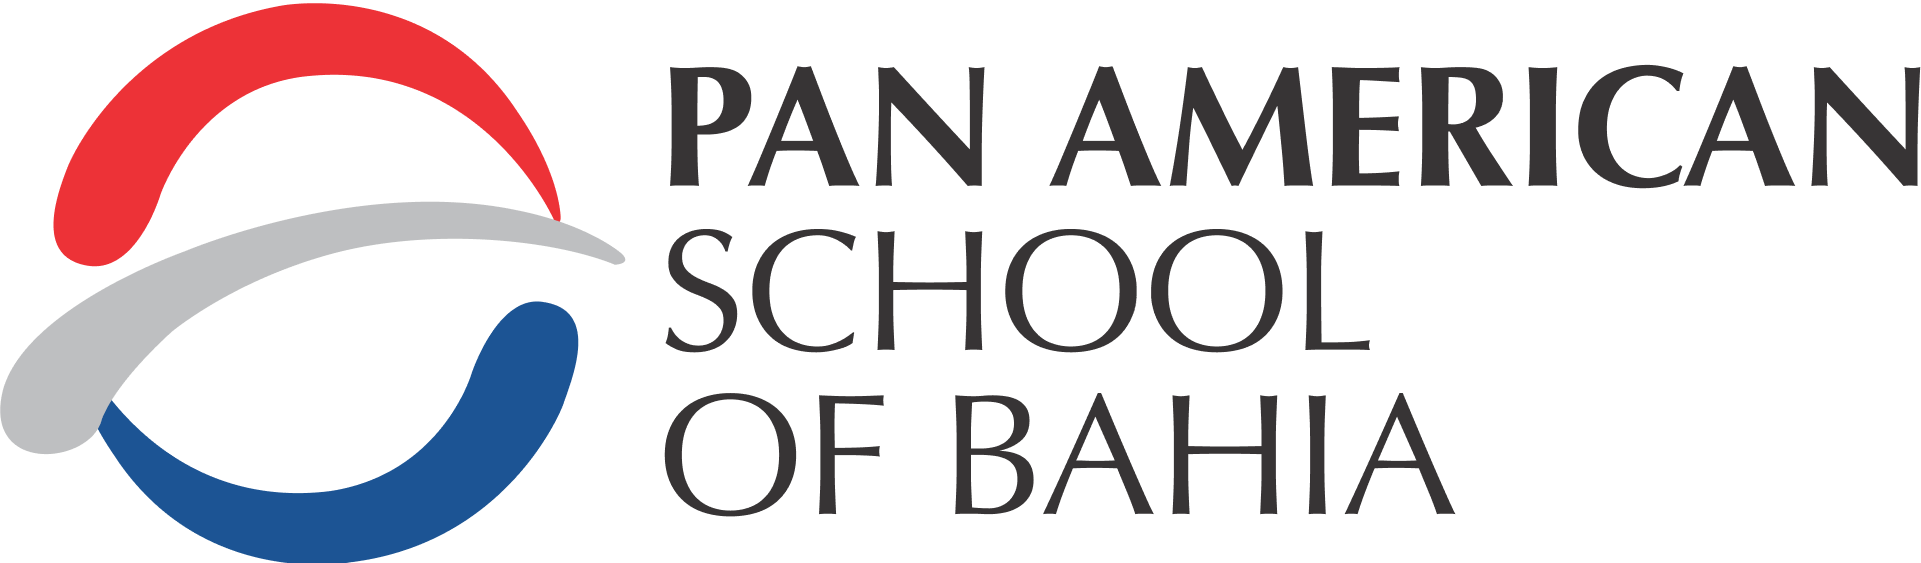 Pan American School of Bahia